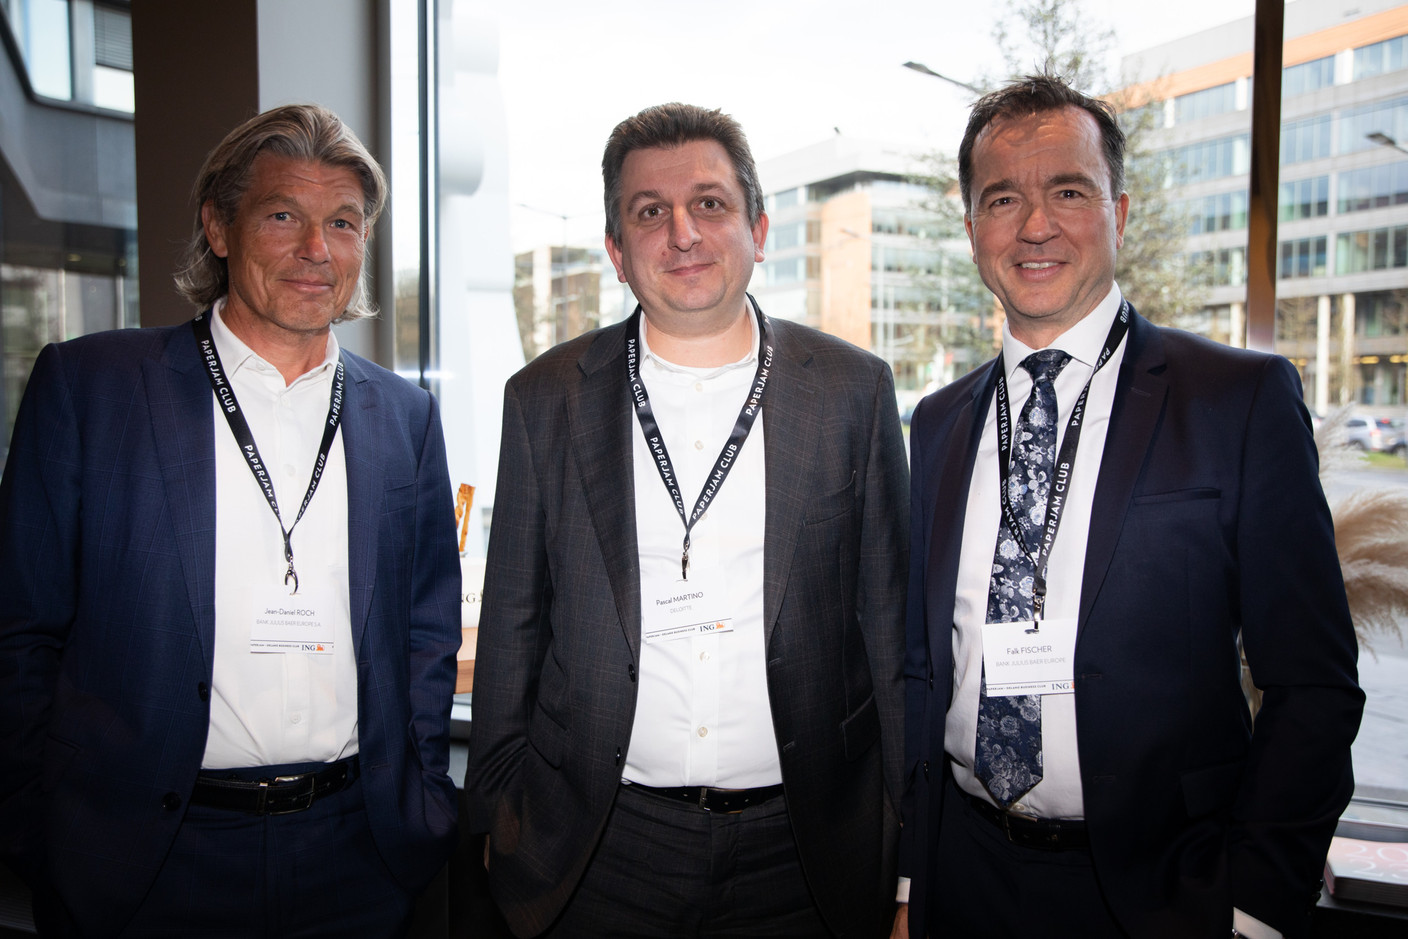 Jean-Daniel Roch (Bank Julius Baer Europe), Pascal Martino (Deloitte) and Falk Fischer (Bank Julius Baer Europe). Photo: Eva Krins/Maison Moderne